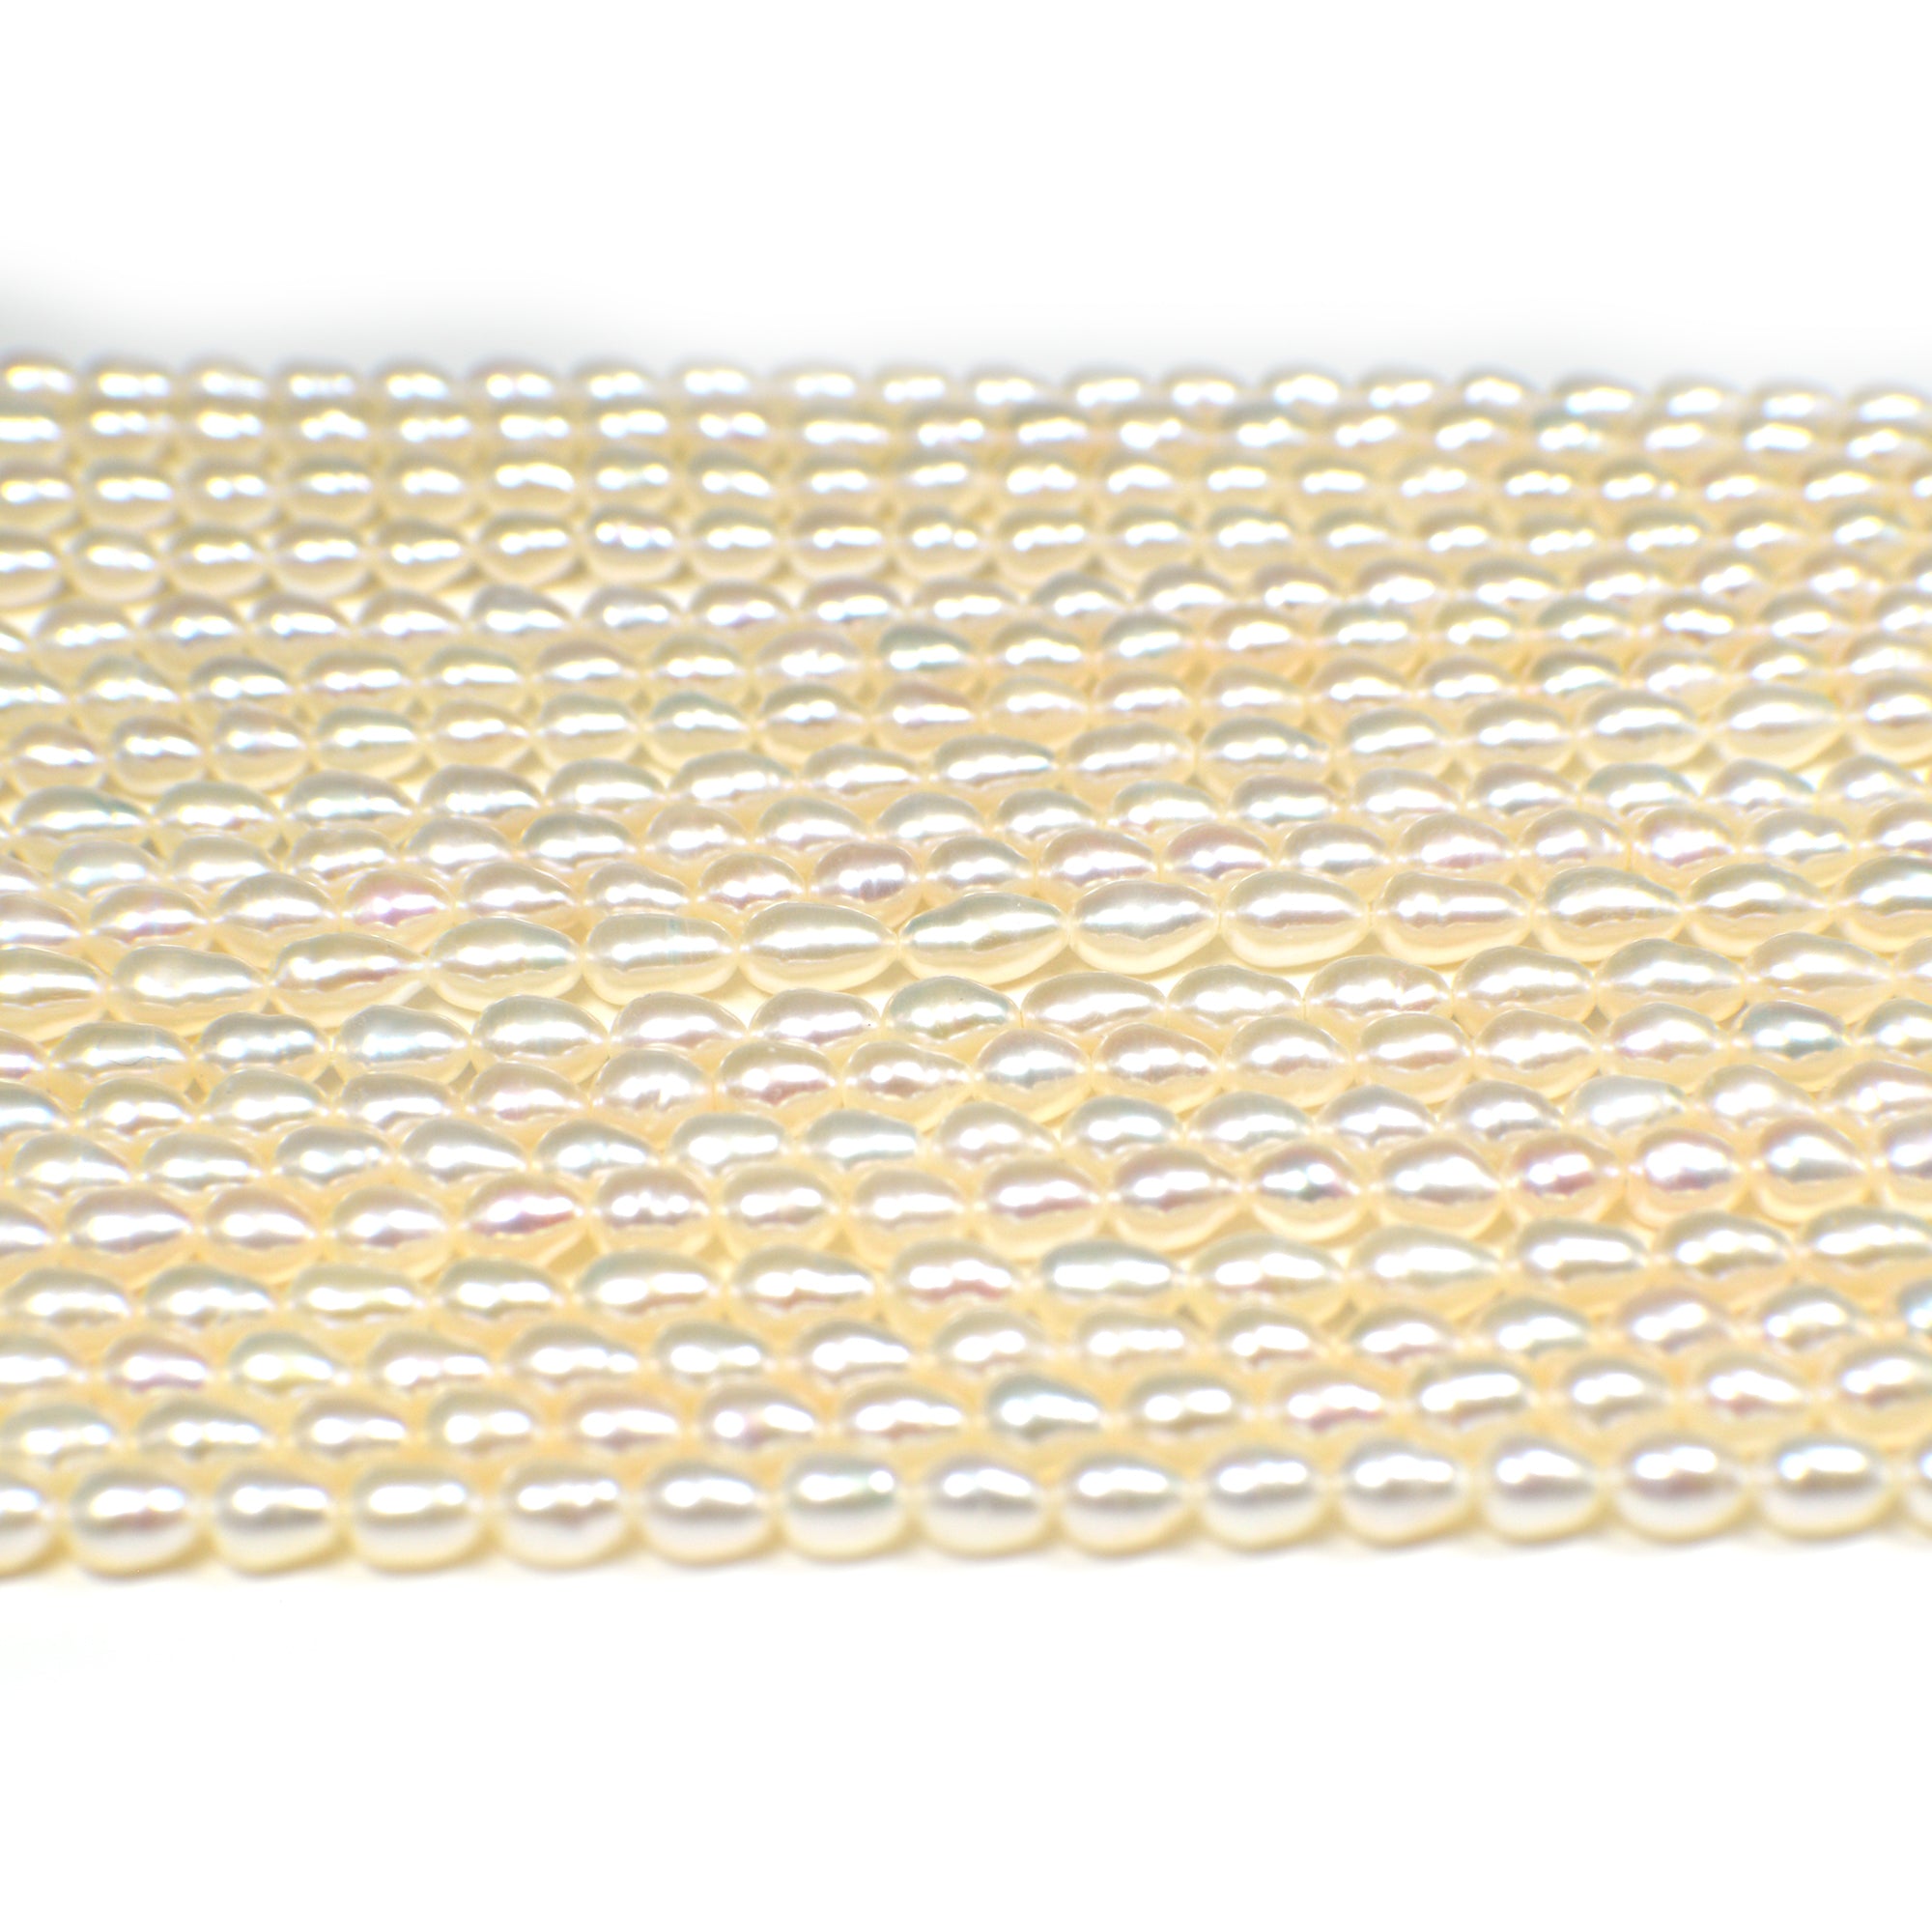 5x4 - 6x4 MM White Rice Freshwater Pearls Beads